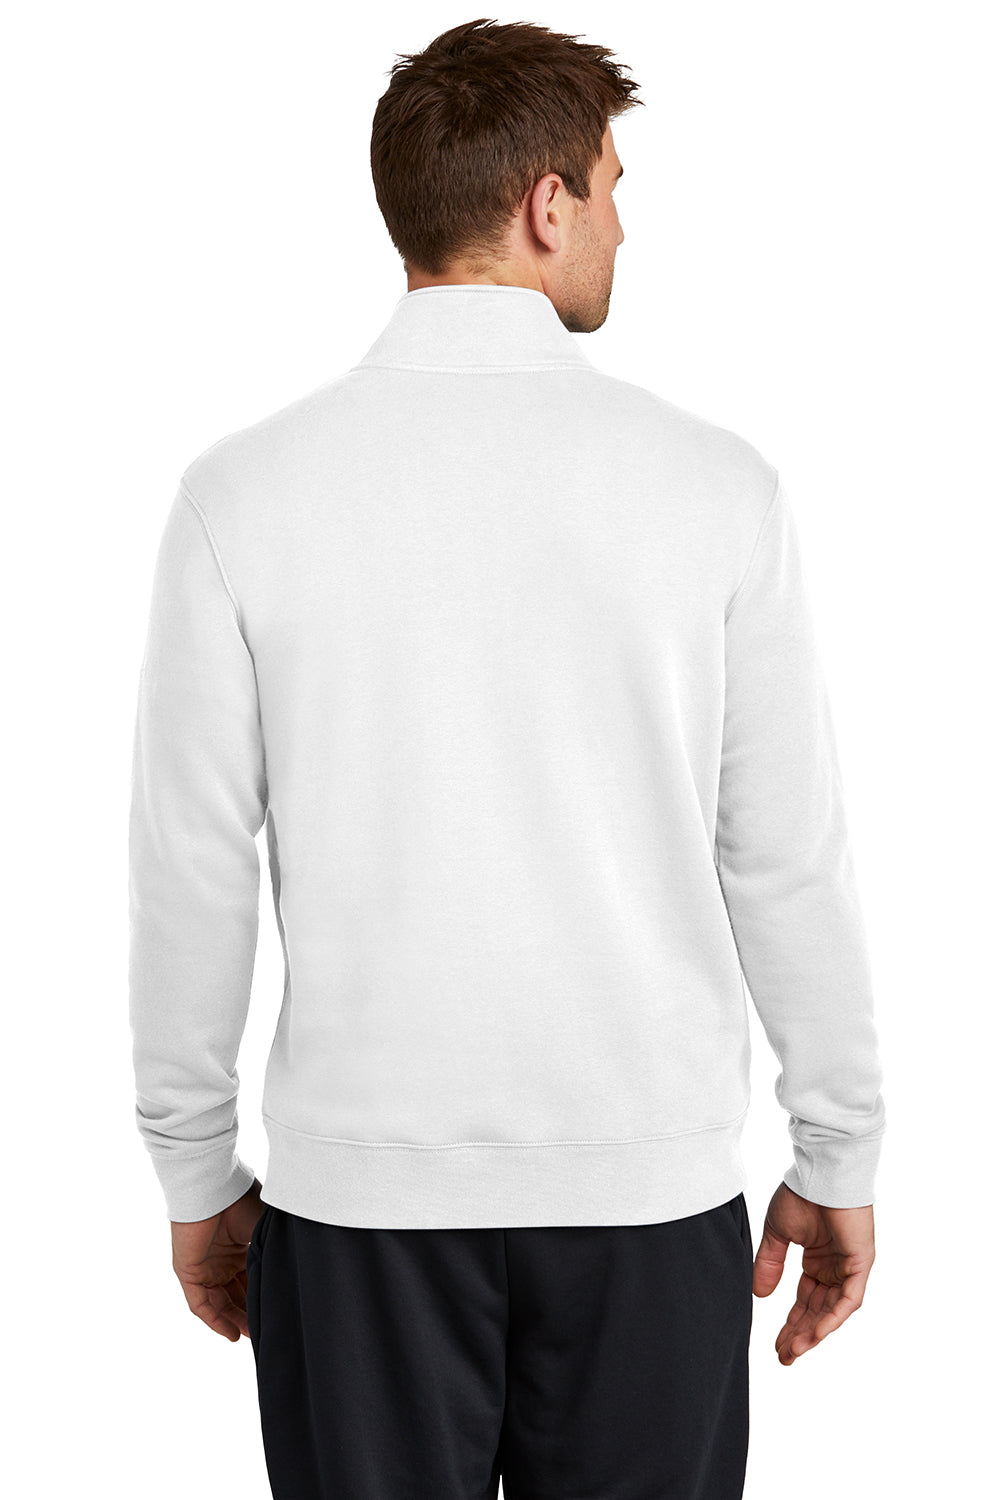 Nike NKDX6718 Mens Club Fleece 1/4 Zip Sweatshirt White Model Back